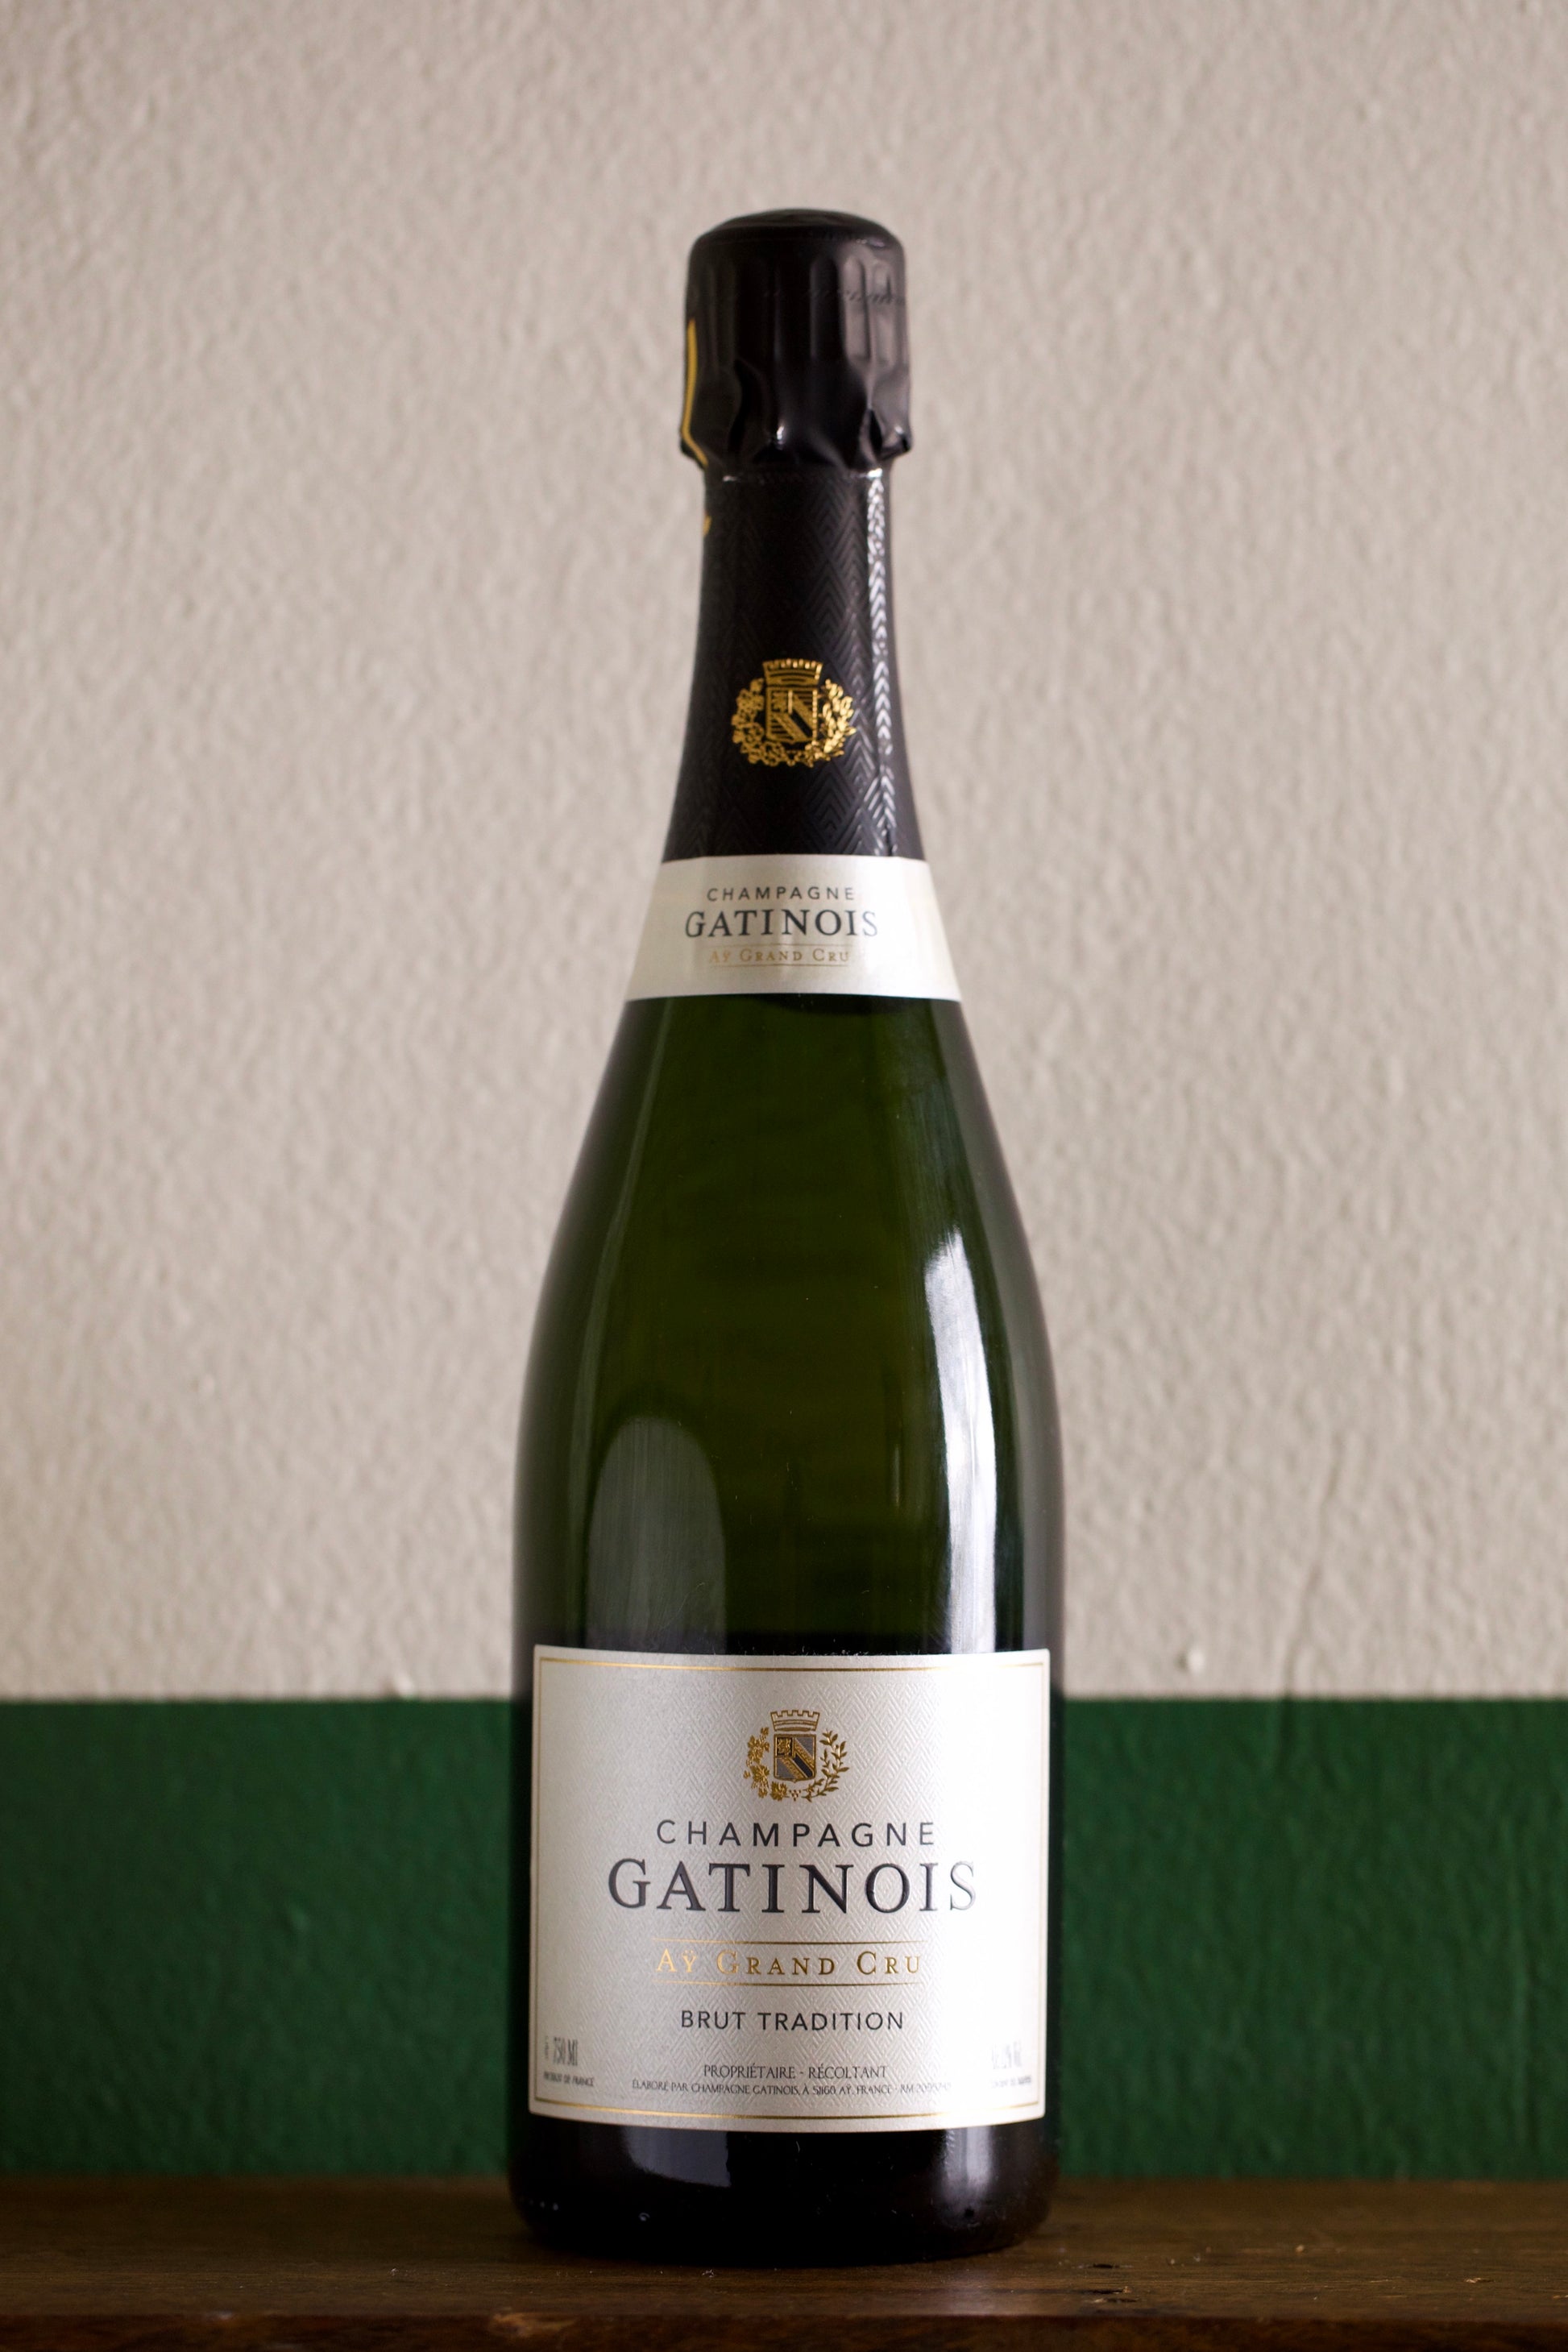 Bottle of Champagne Gatinoise Grand Cru Brut Tradition NV 750ml